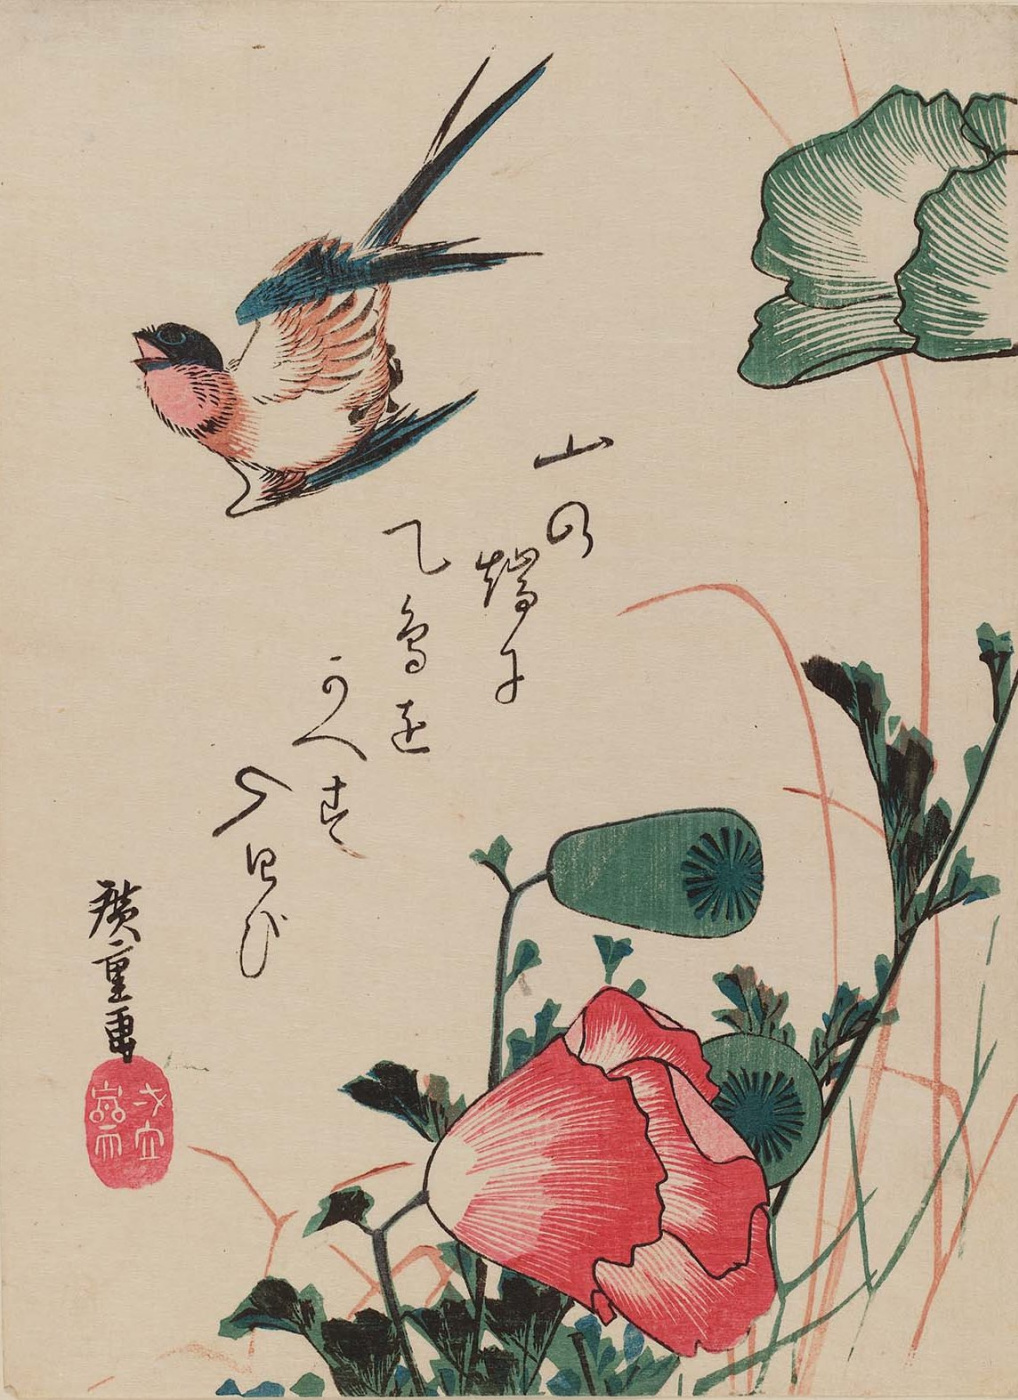 Utagawa Hiroshige. Swallow and Mac. Series "Birds and flowers"